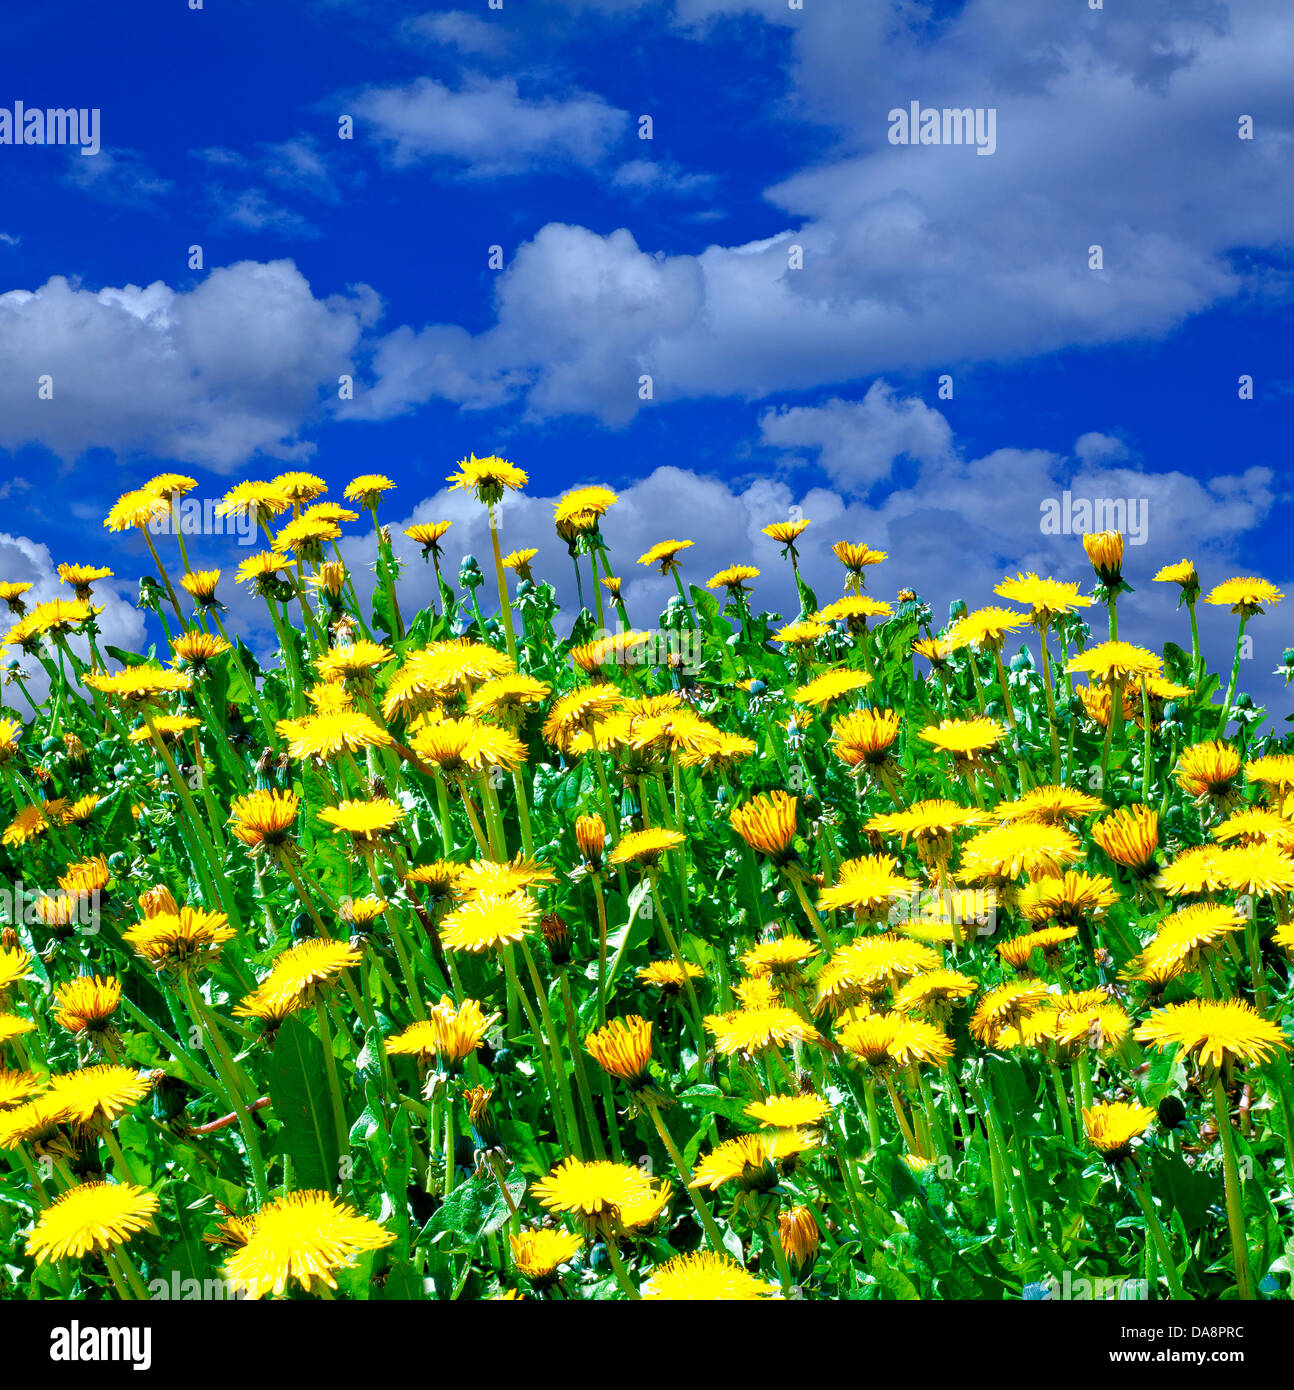 Austria, Europe, Tyrol, Obsteig, meadow, flowers, dandelion, dandelion meadow, Taraxacum Officinale, meadow flowers, sky, clouds Stock Photo